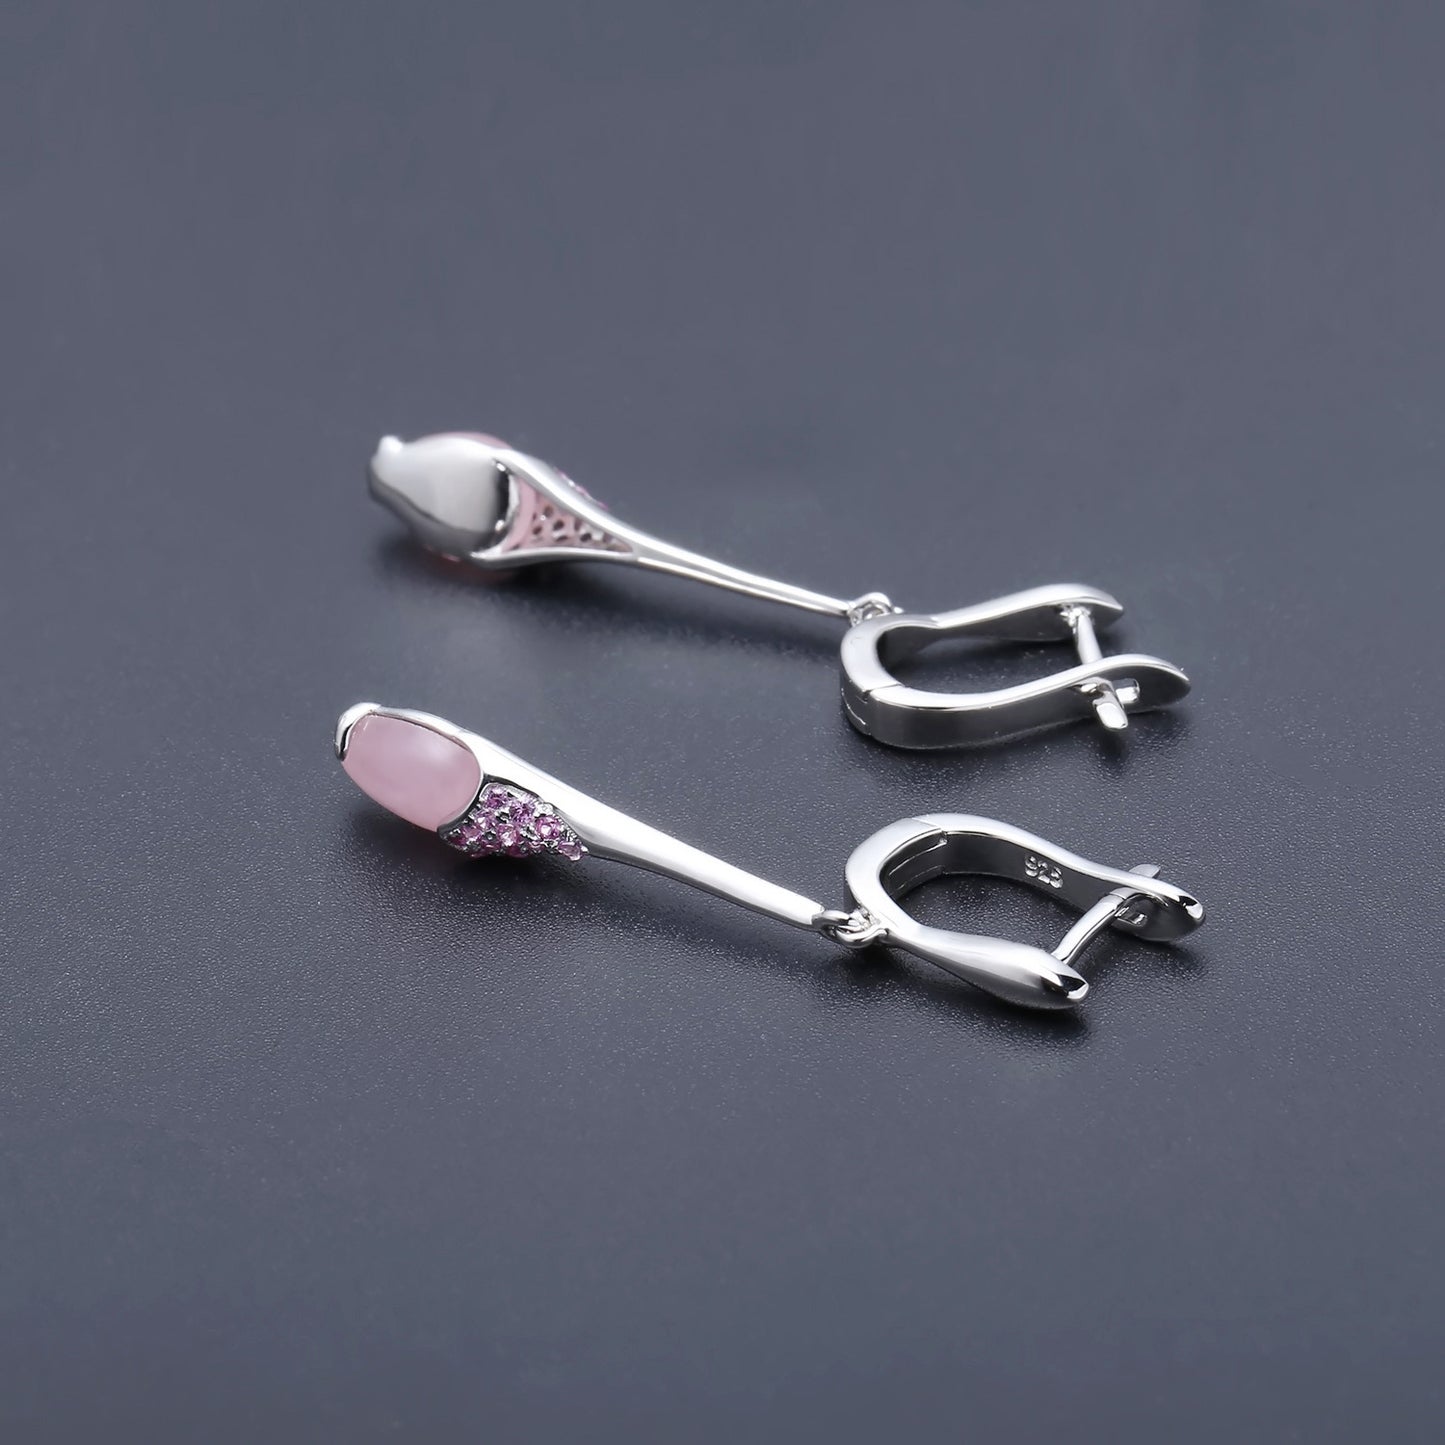 Italian Design Inlaid Pink Chalcedony Long Style Silver Drop Earrings for Women